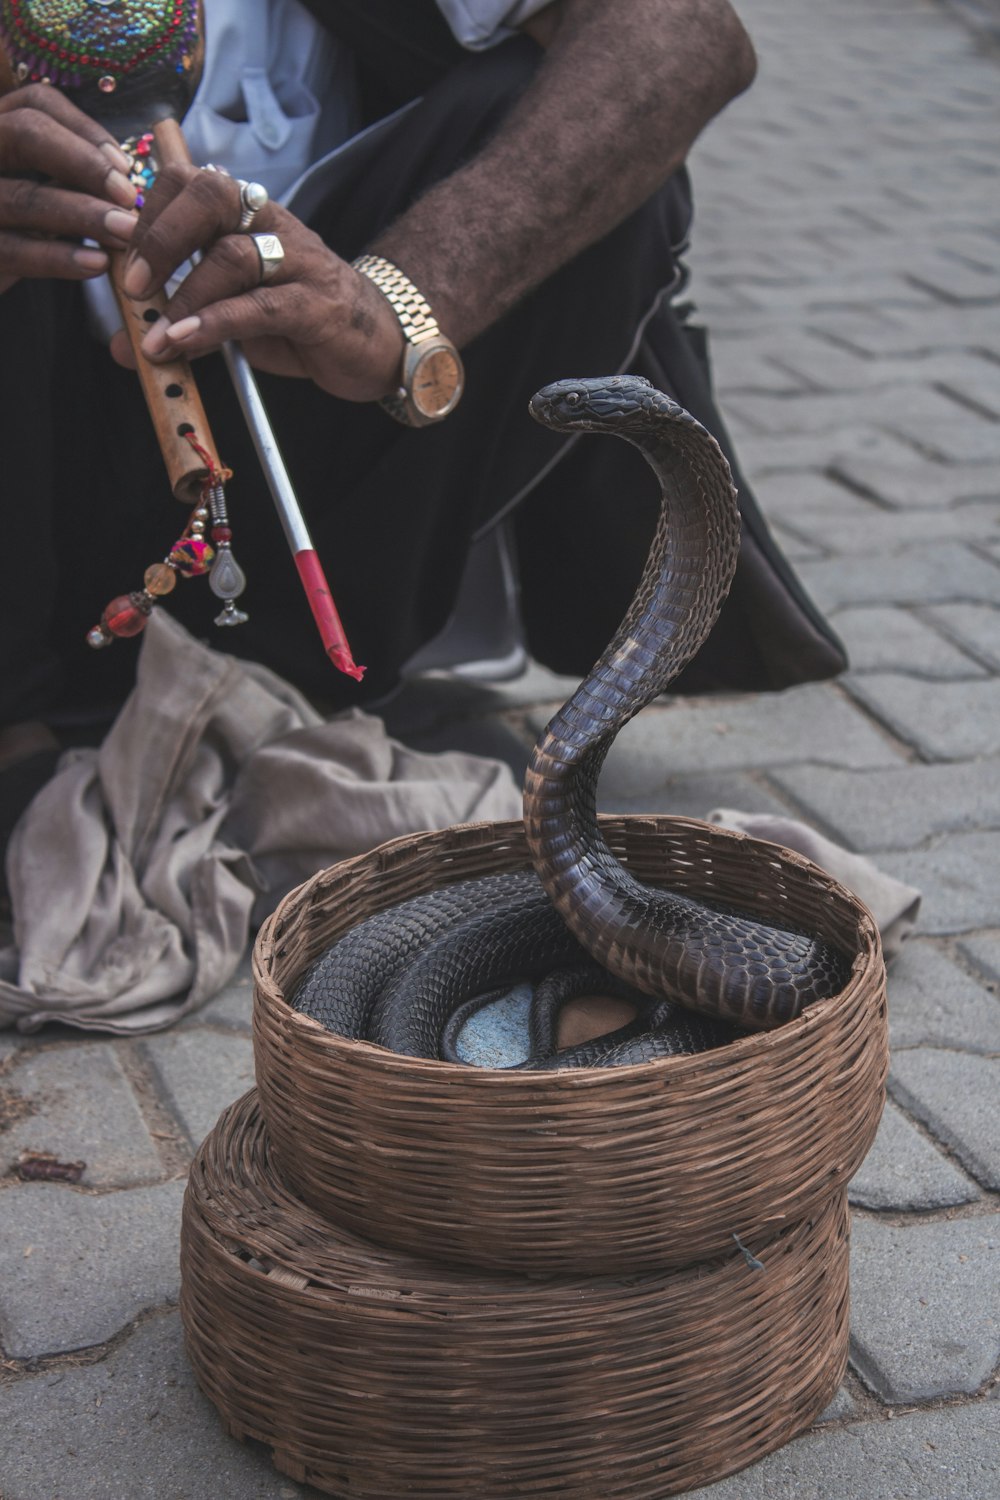 Brown snake in basket photo – Free Black Image on Unsplash